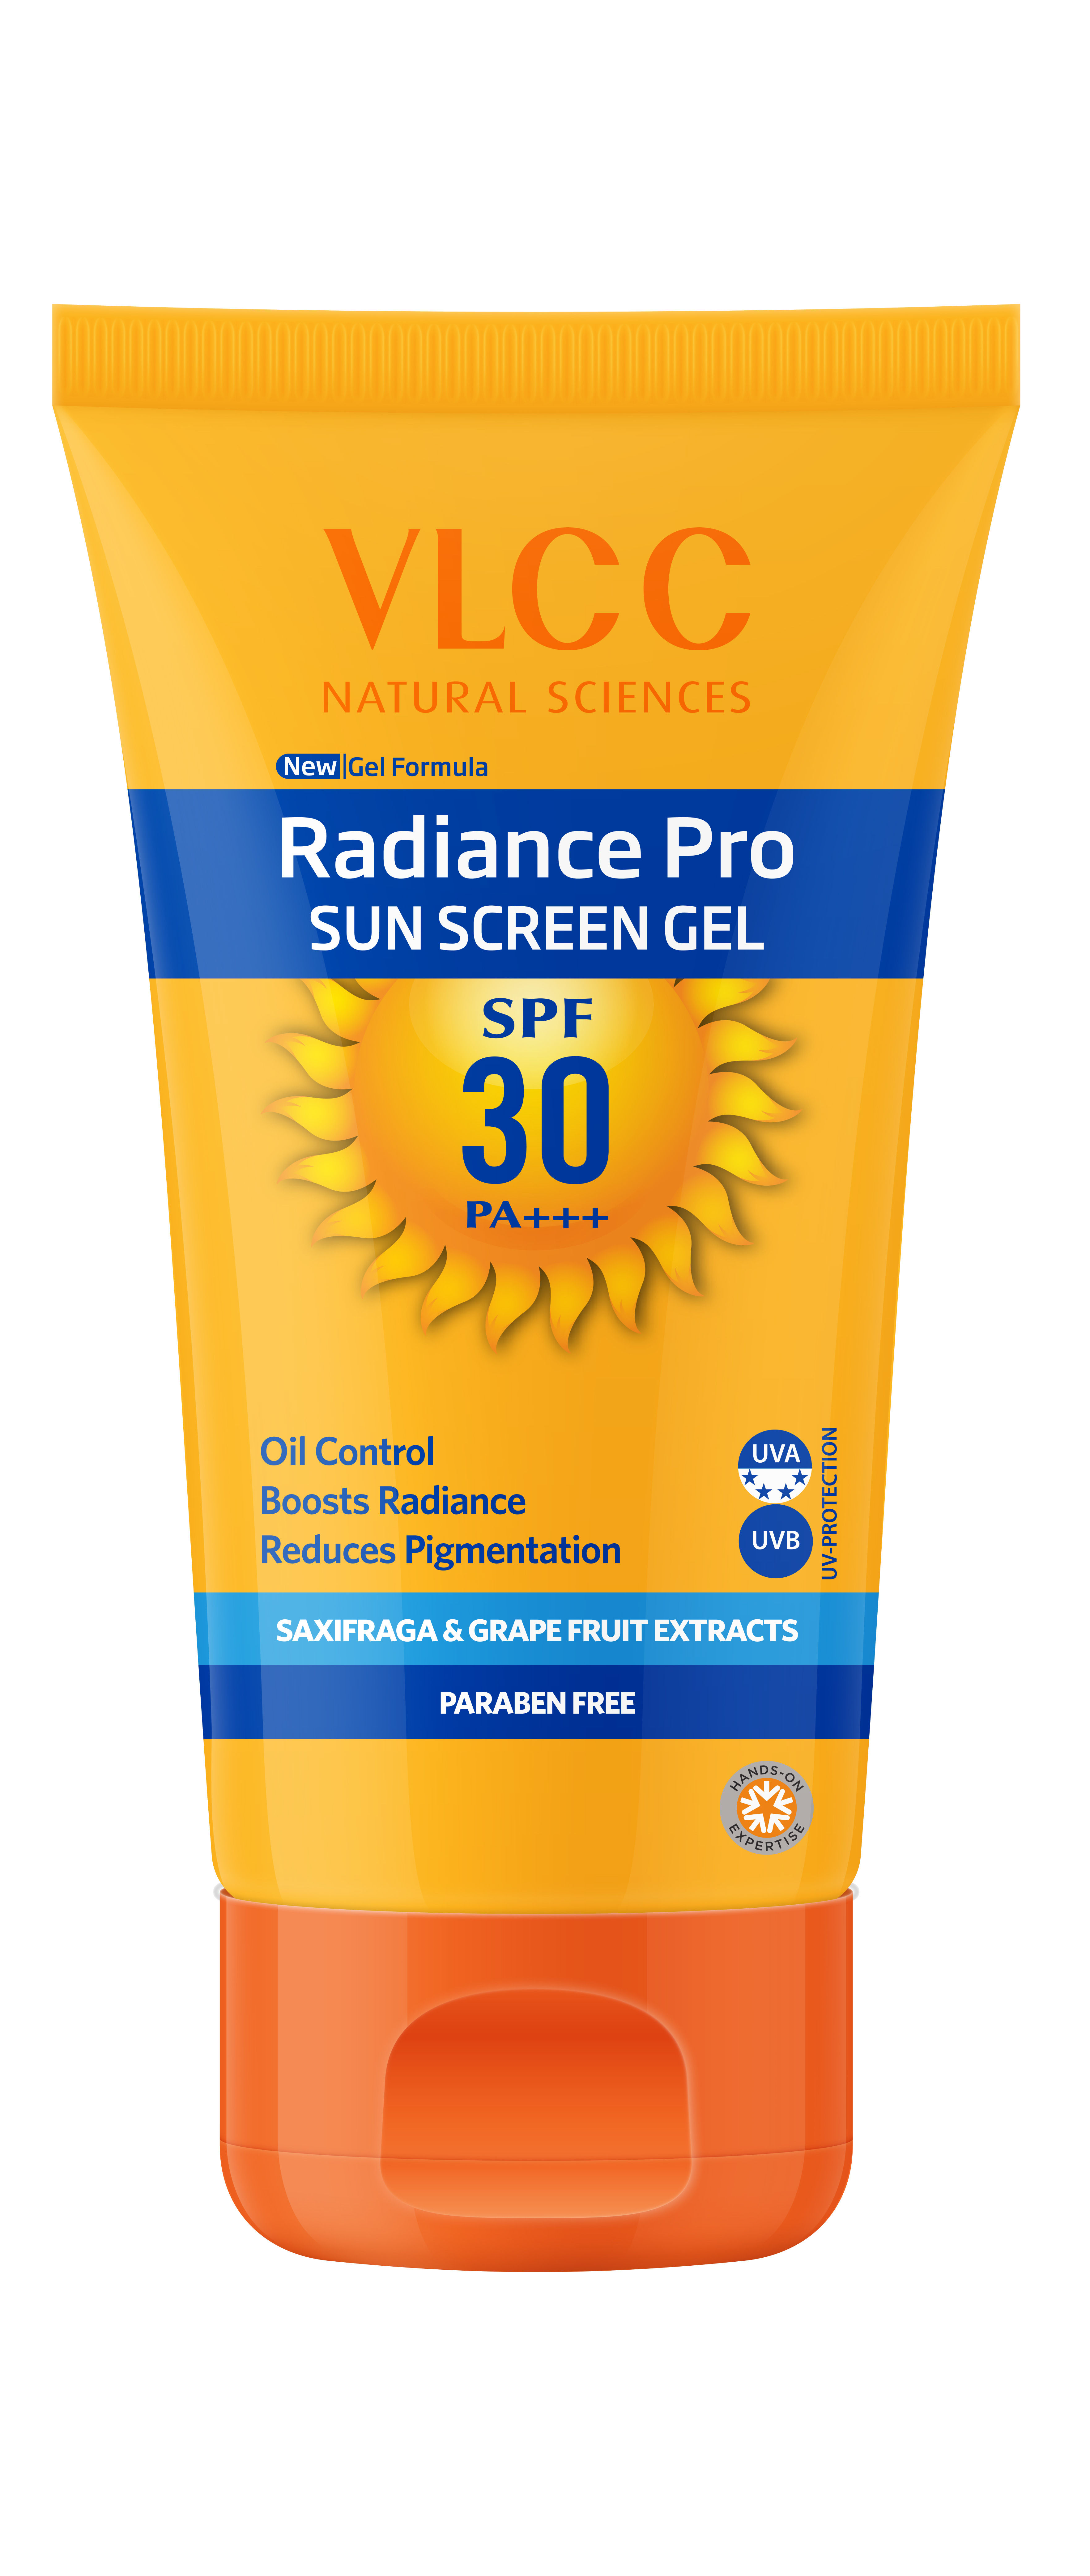 VLCC Radiance Pro SPF 30 PA+++ Sun Screen Gel